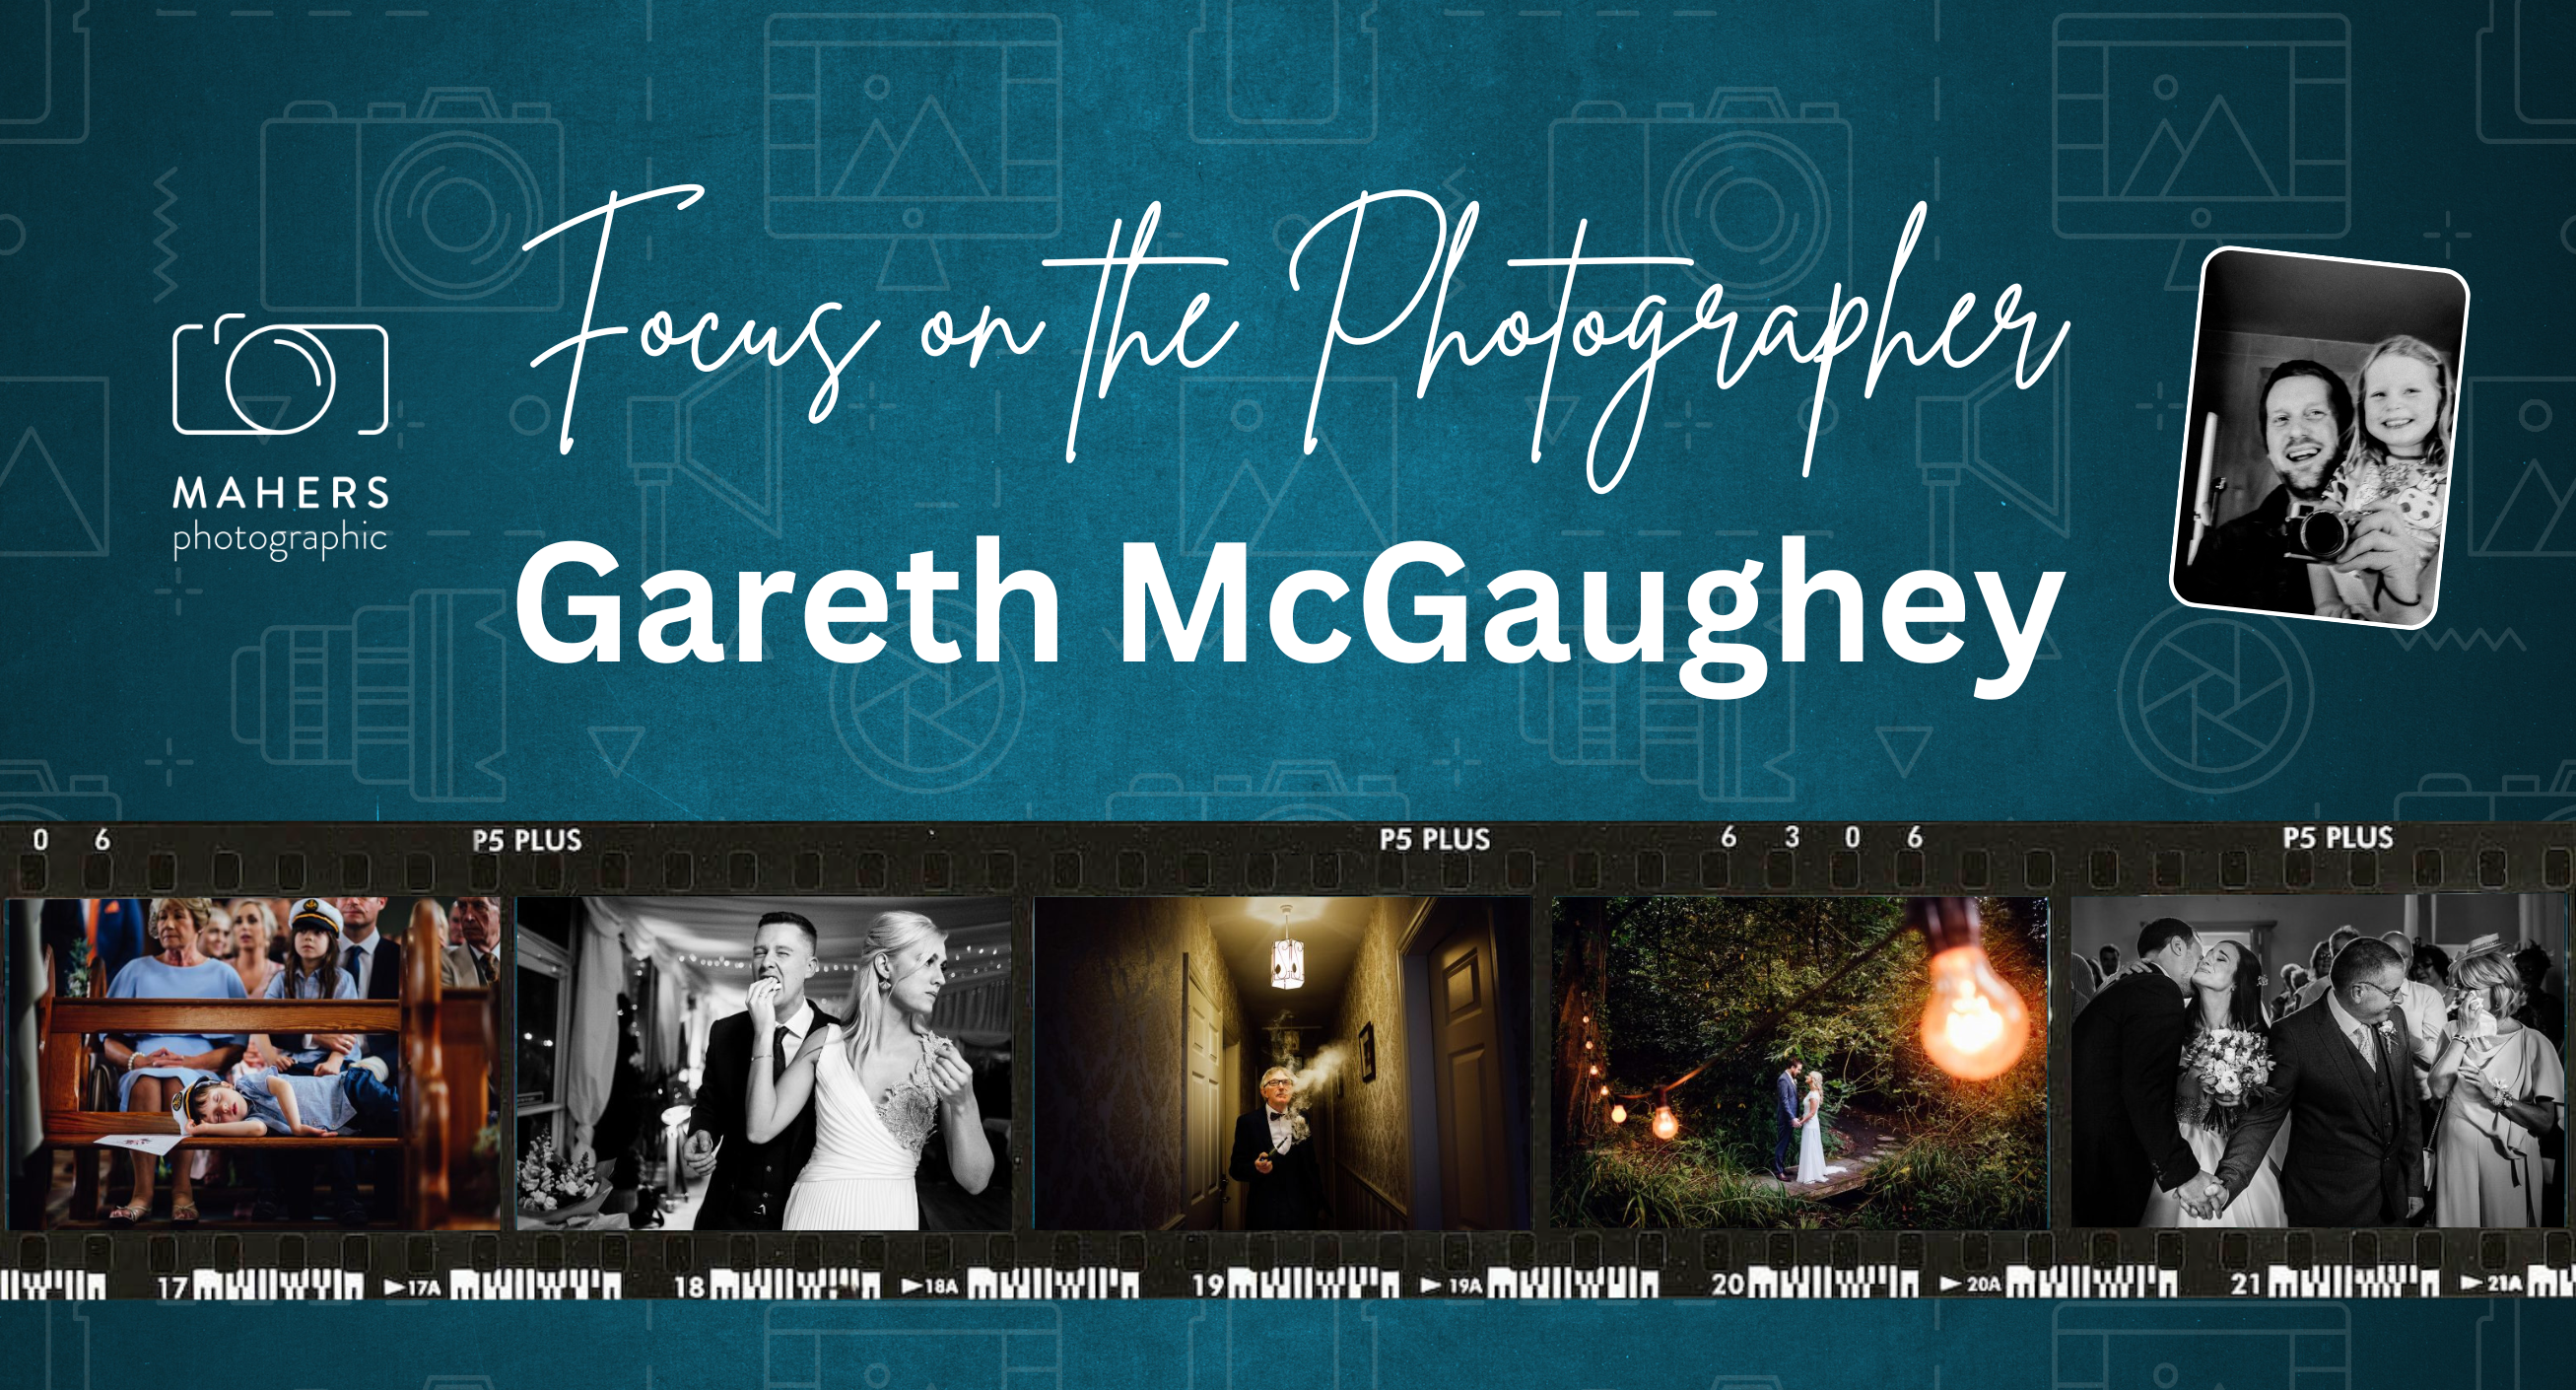 Focus on the Photographer - Gareth McGaughey